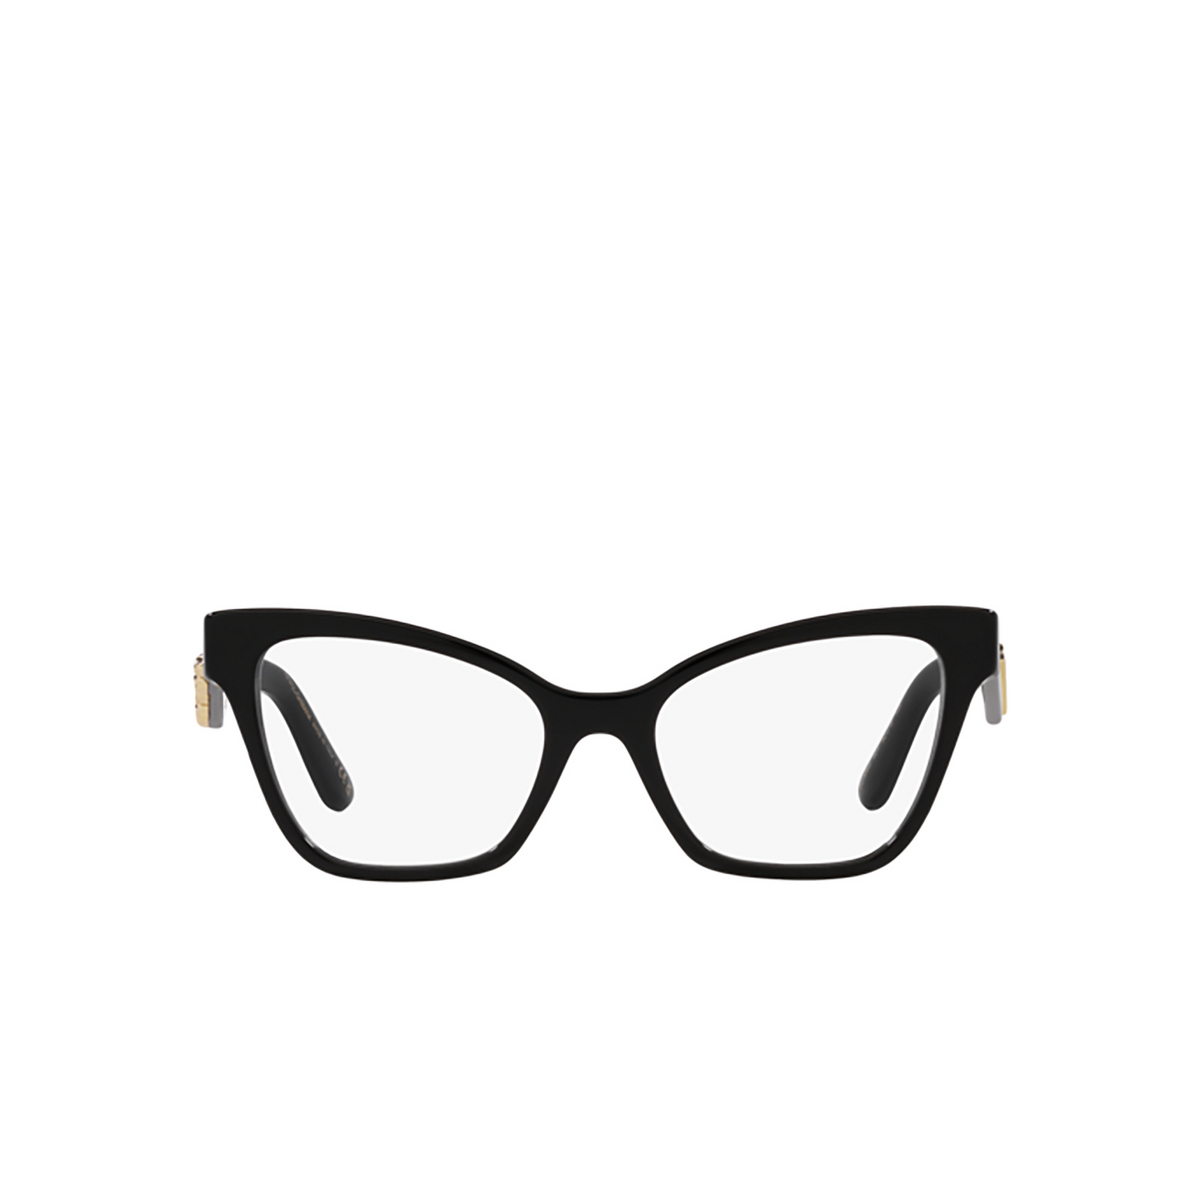 Dolce & Gabbana DG3369 Eyeglasses 501 Black - front view